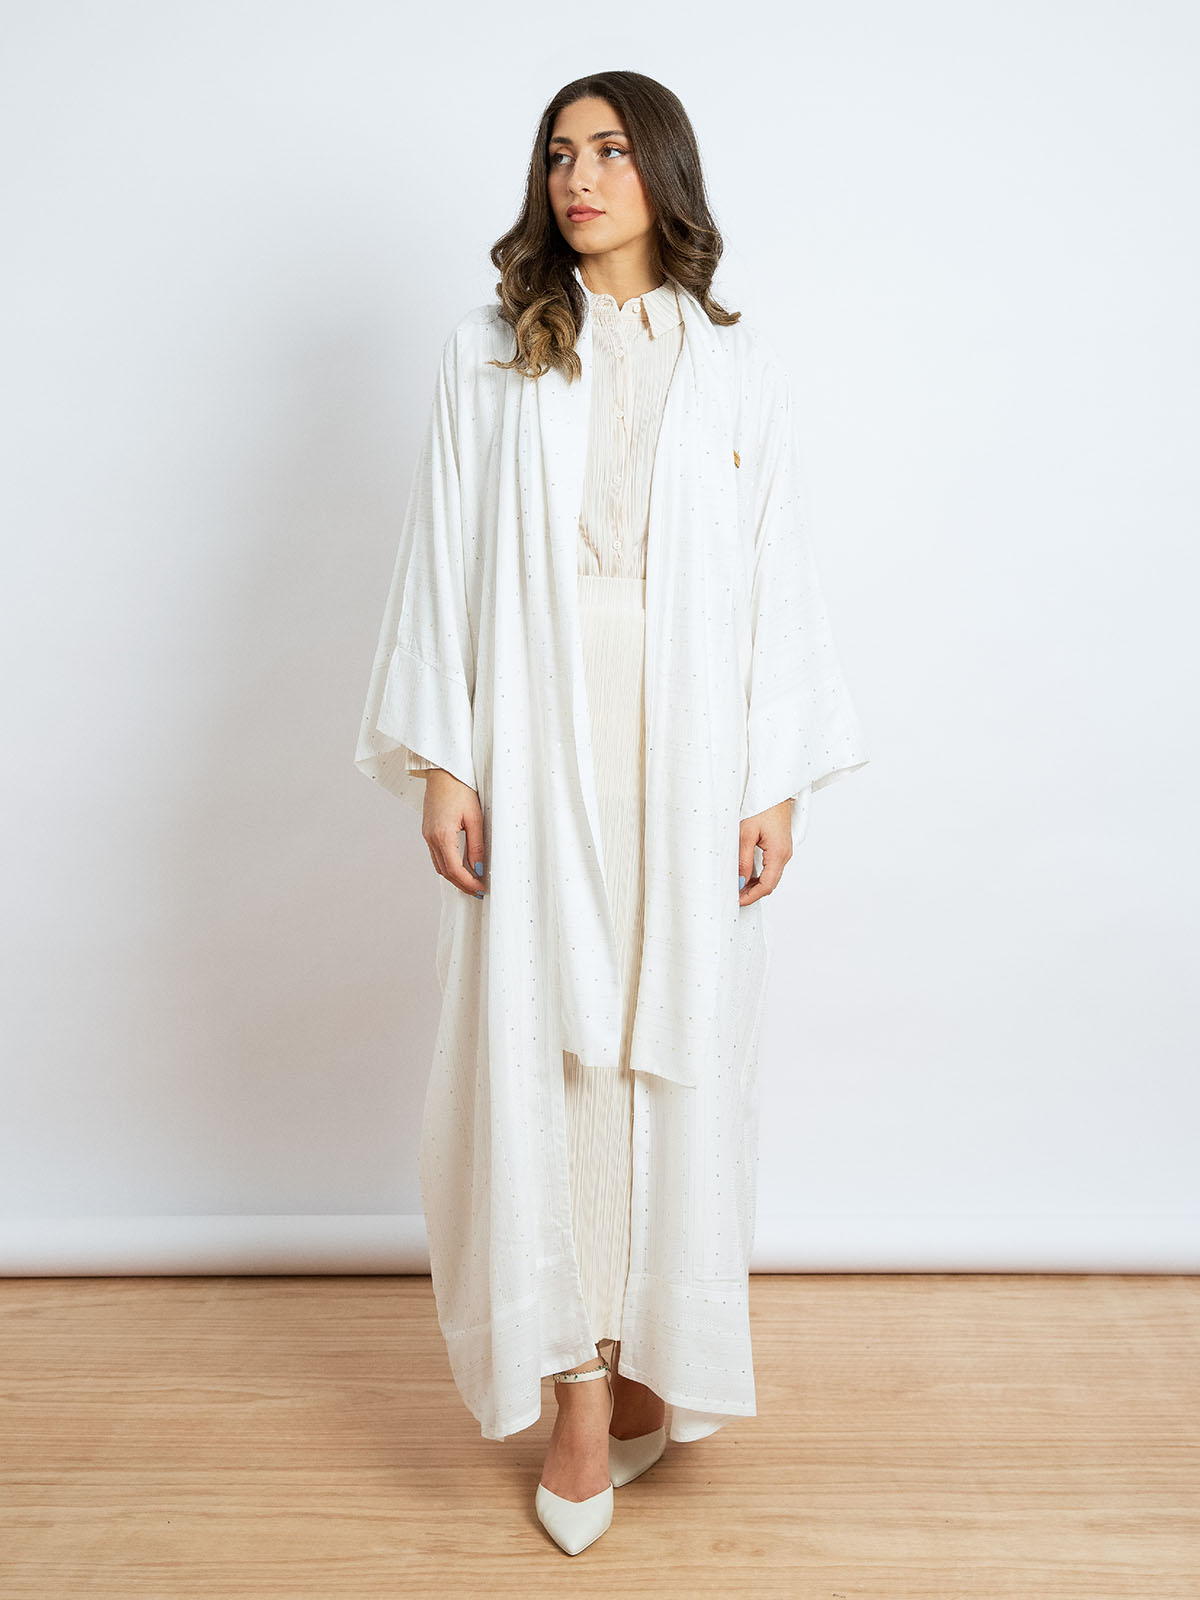 Kaafmeem women clothing wide cut white color long fancy sequin abaya in lightweight fabric for Ramadan nights